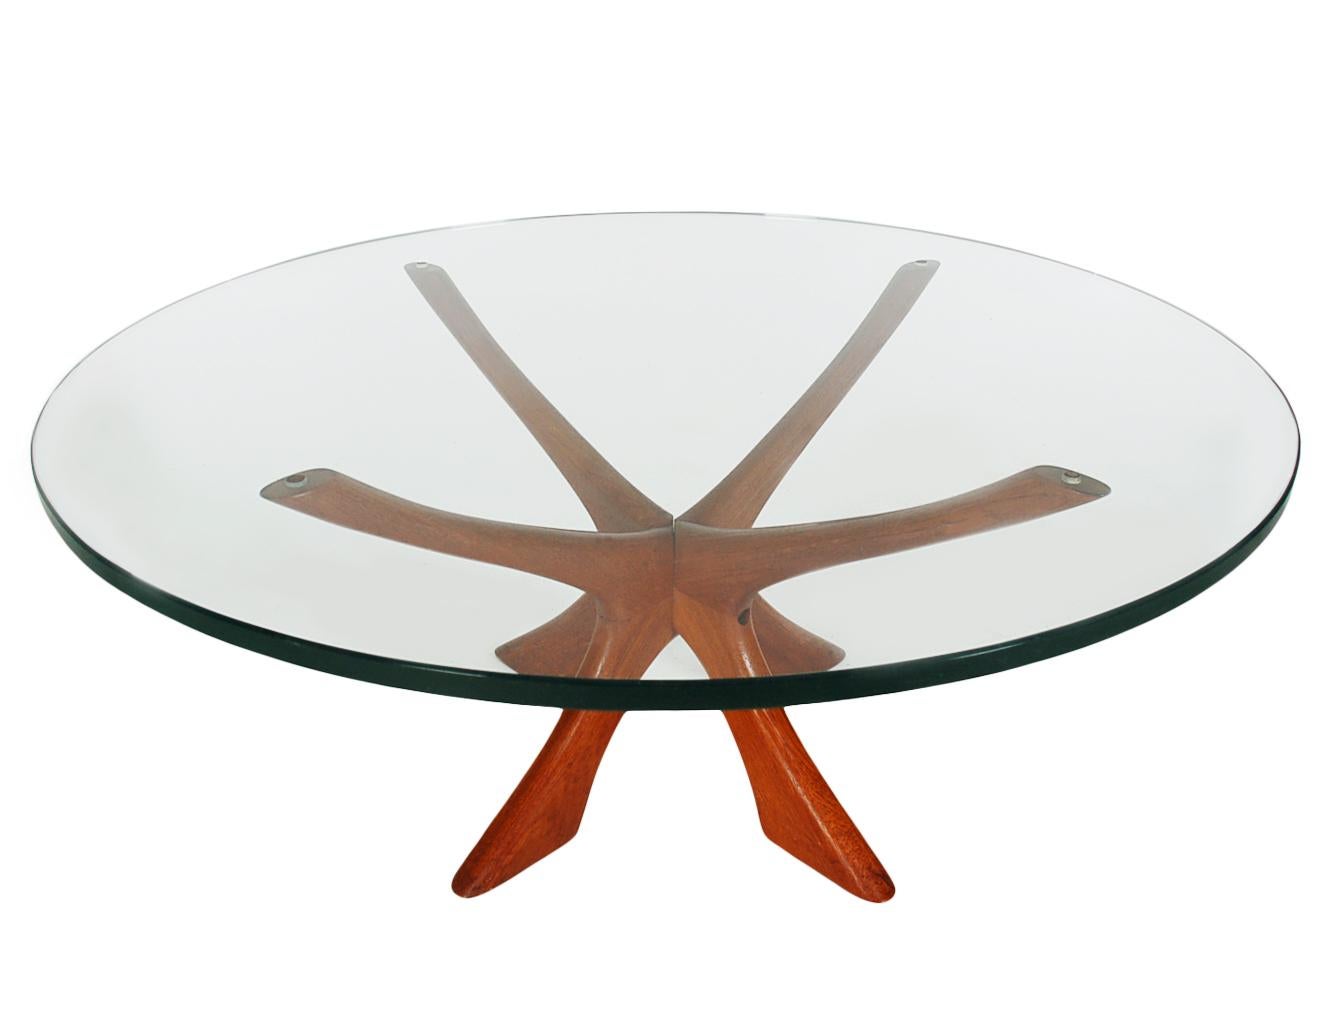 Midcentury Danish Modern Teak and Glass Top Cocktail Table by Illum Wikkelsø 1